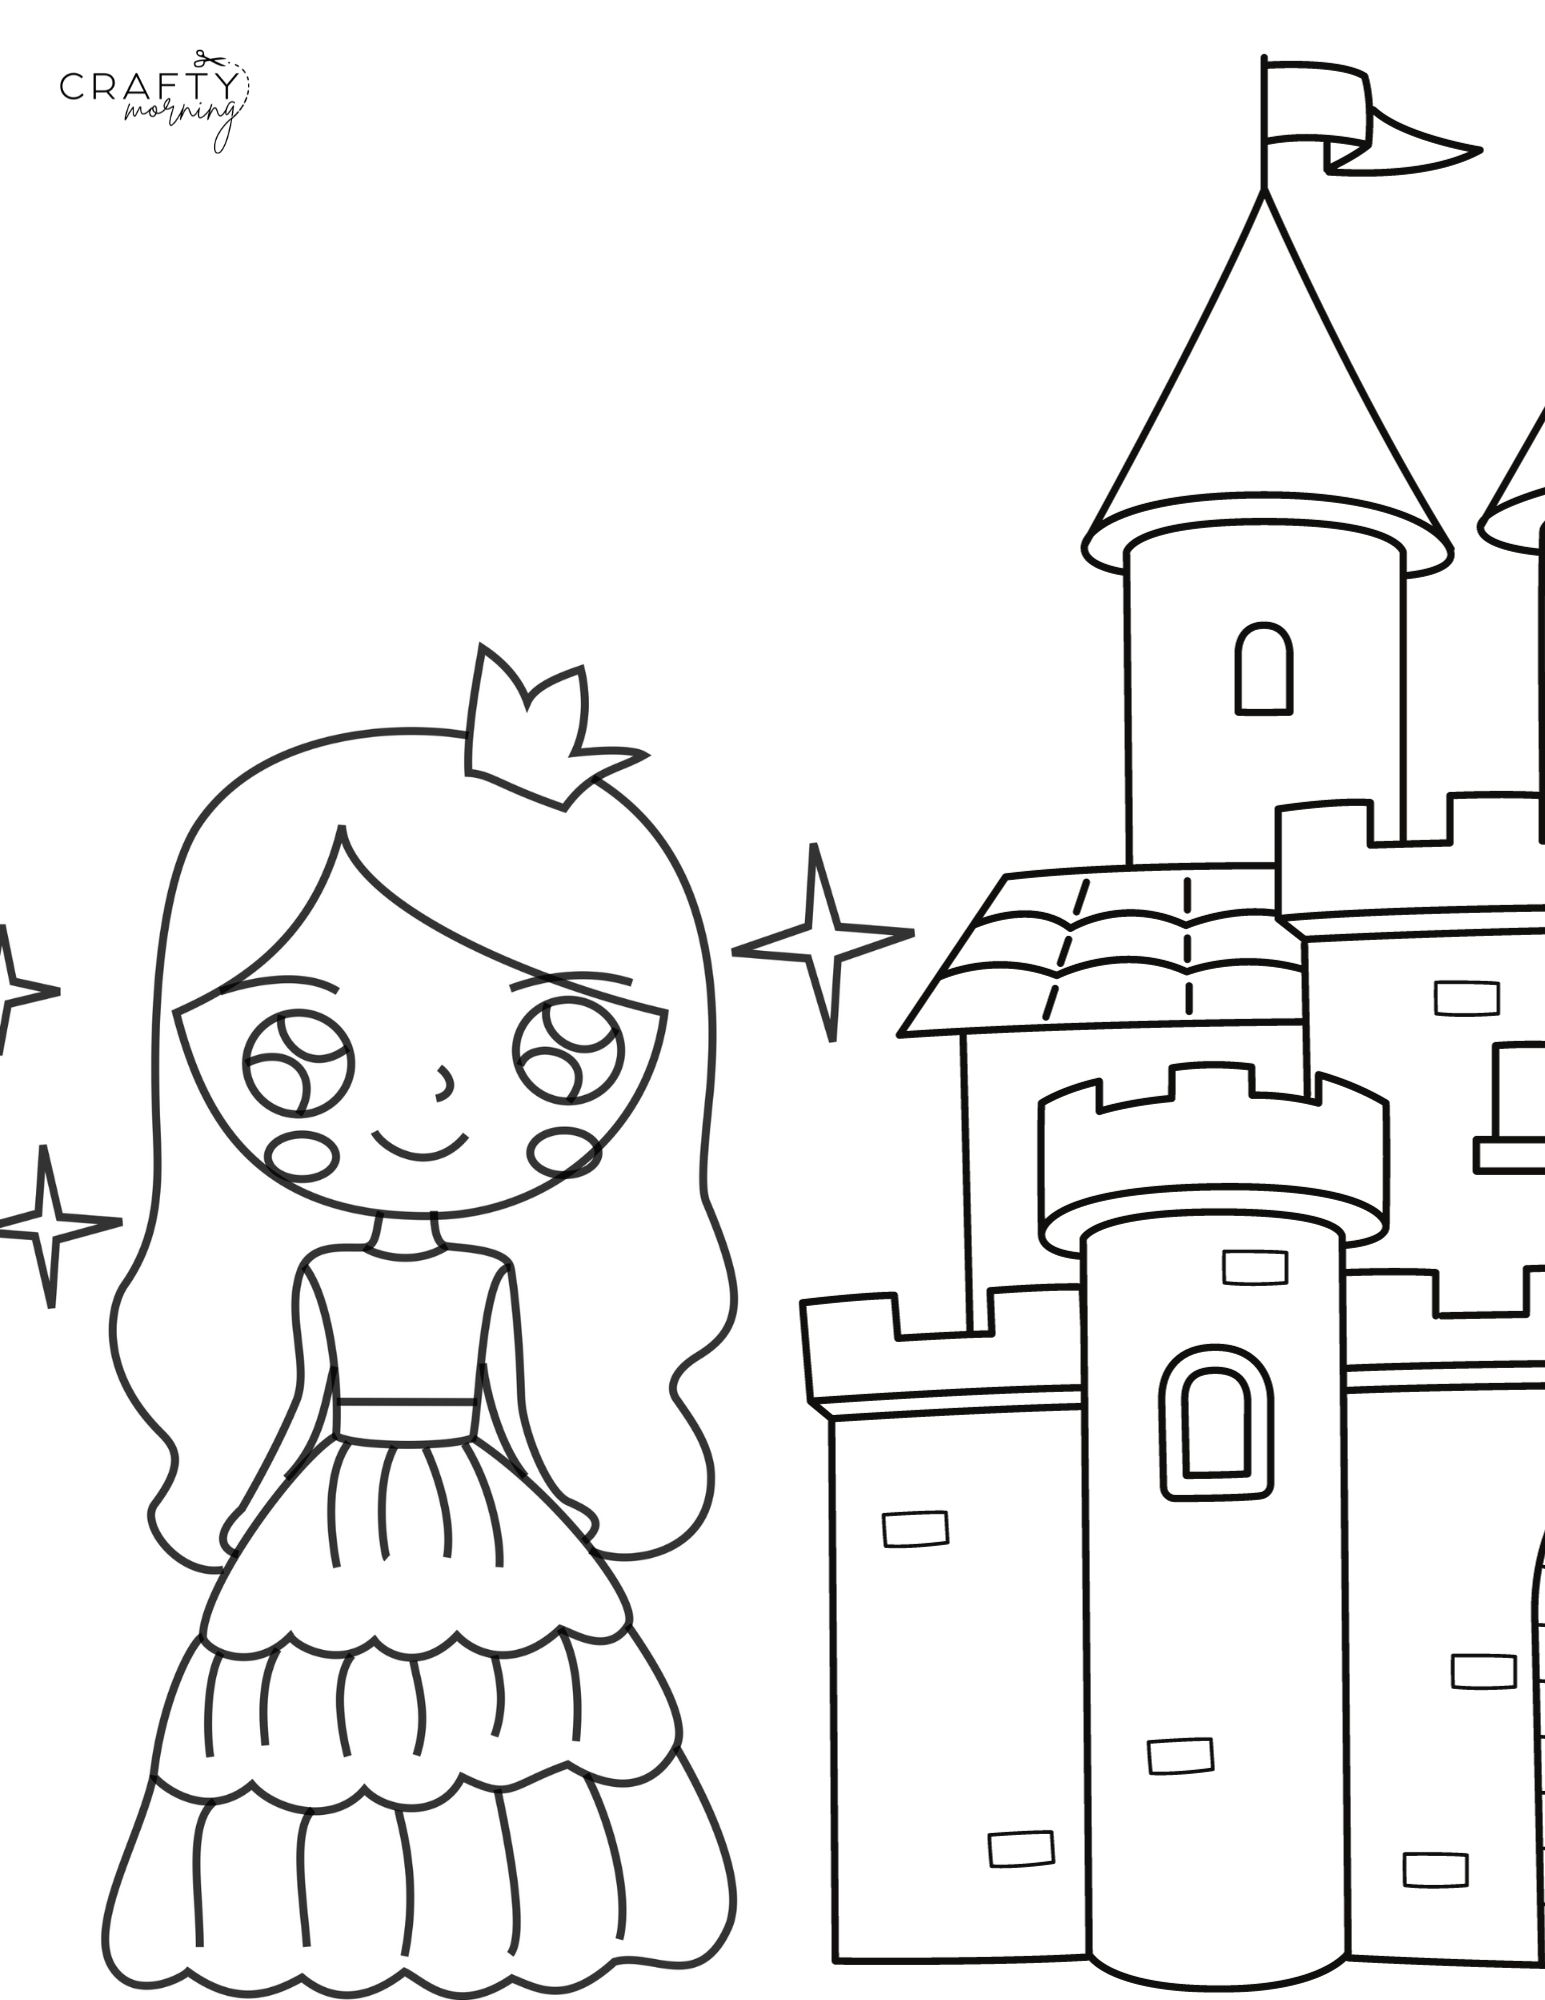 How to Draw a Princess in 12 Step (Anime or Manga) - AnimeOutline